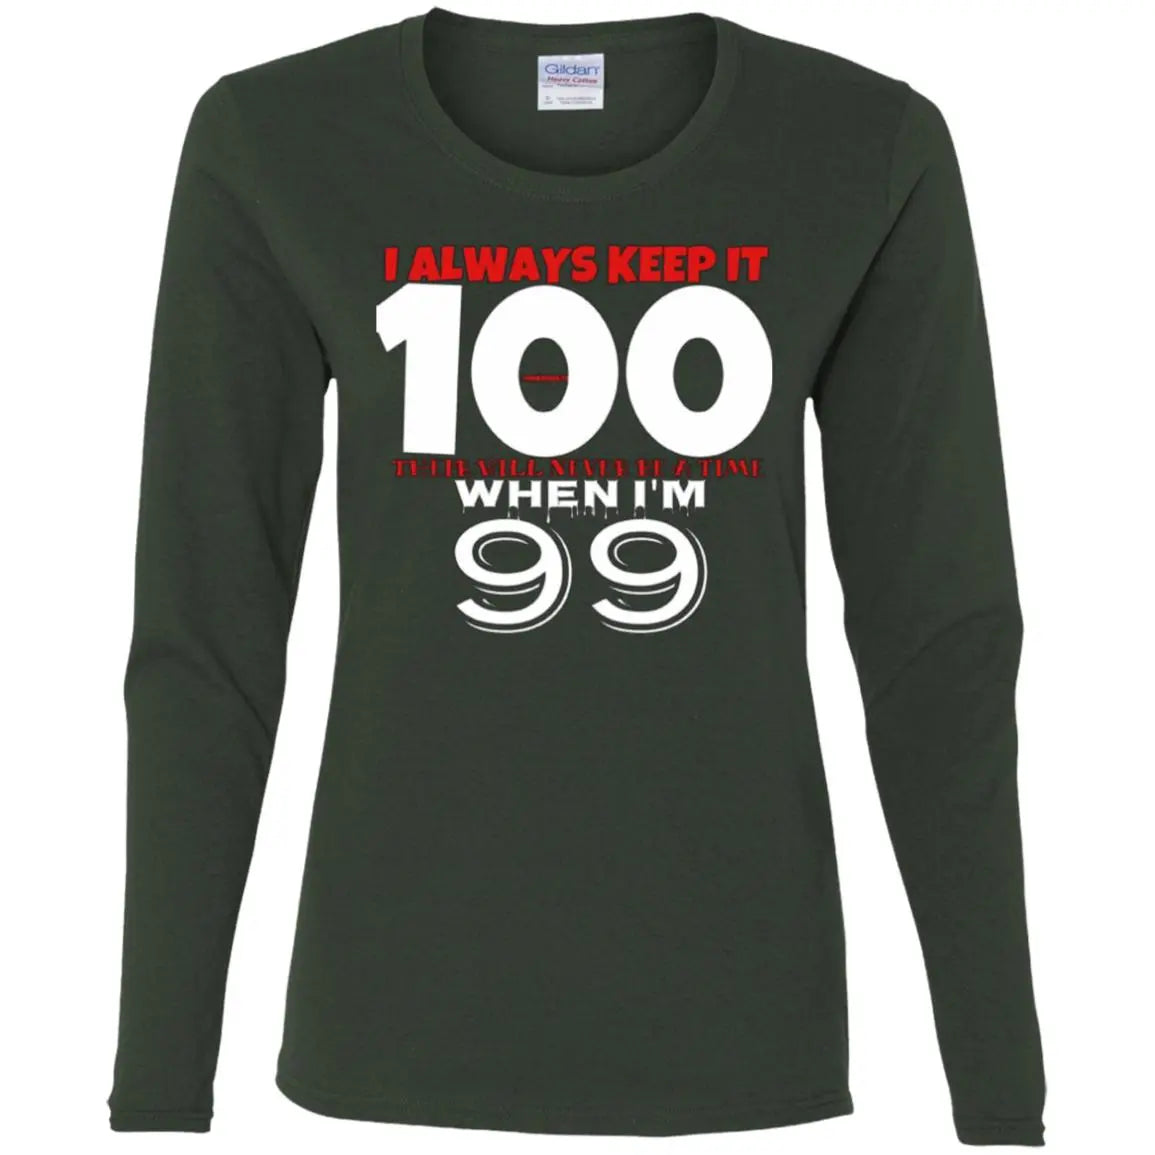 I Always Keep It 100 - Ladies' Cotton LS T-Shirt CustomCat